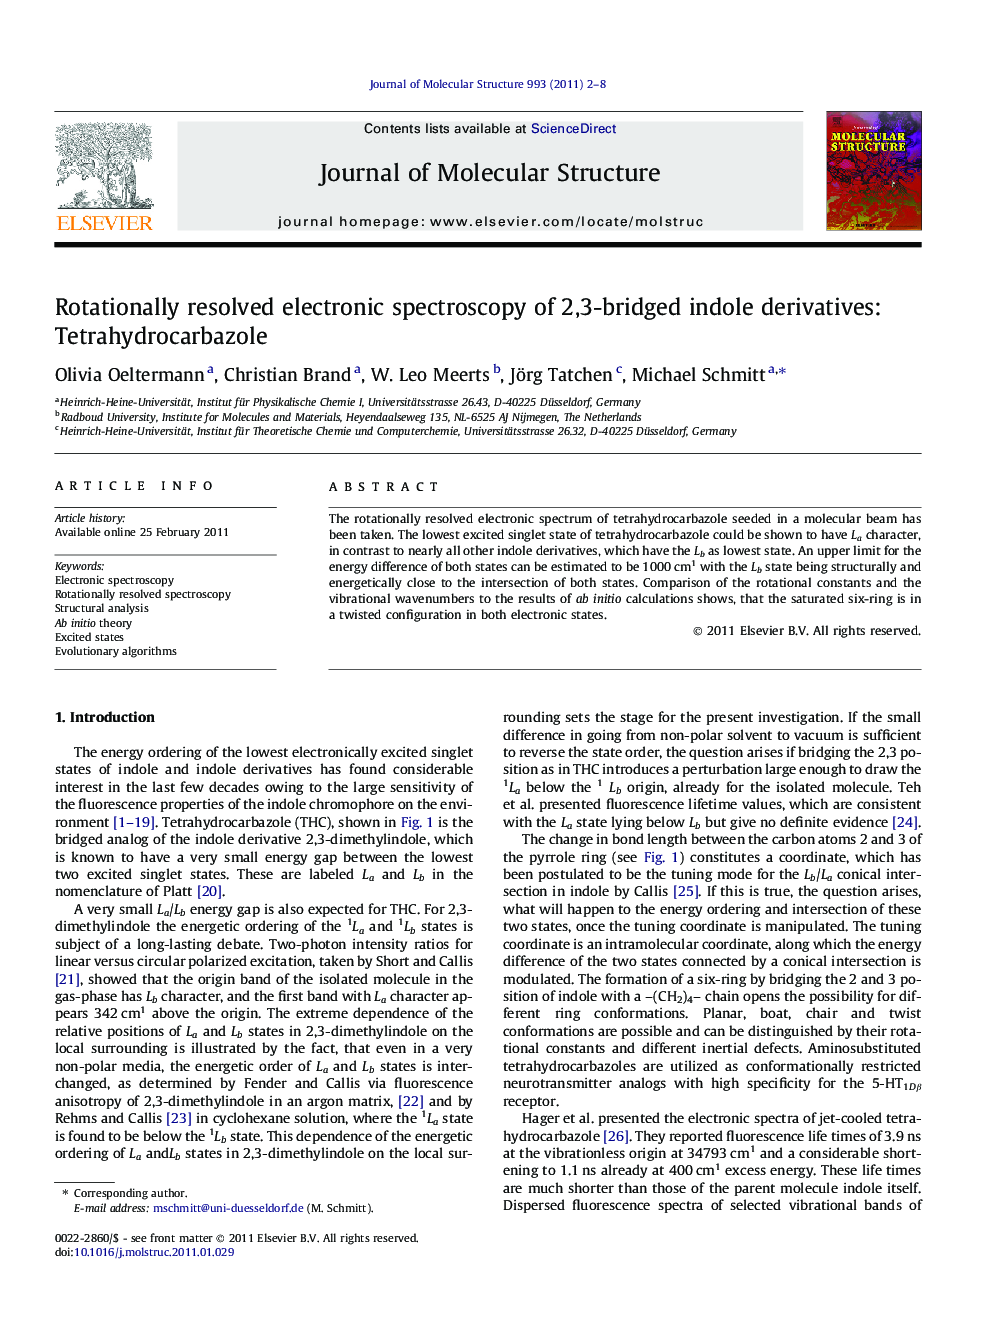 Rotationally resolved electronic spectroscopy of 2,3-bridged indole derivatives: Tetrahydrocarbazole